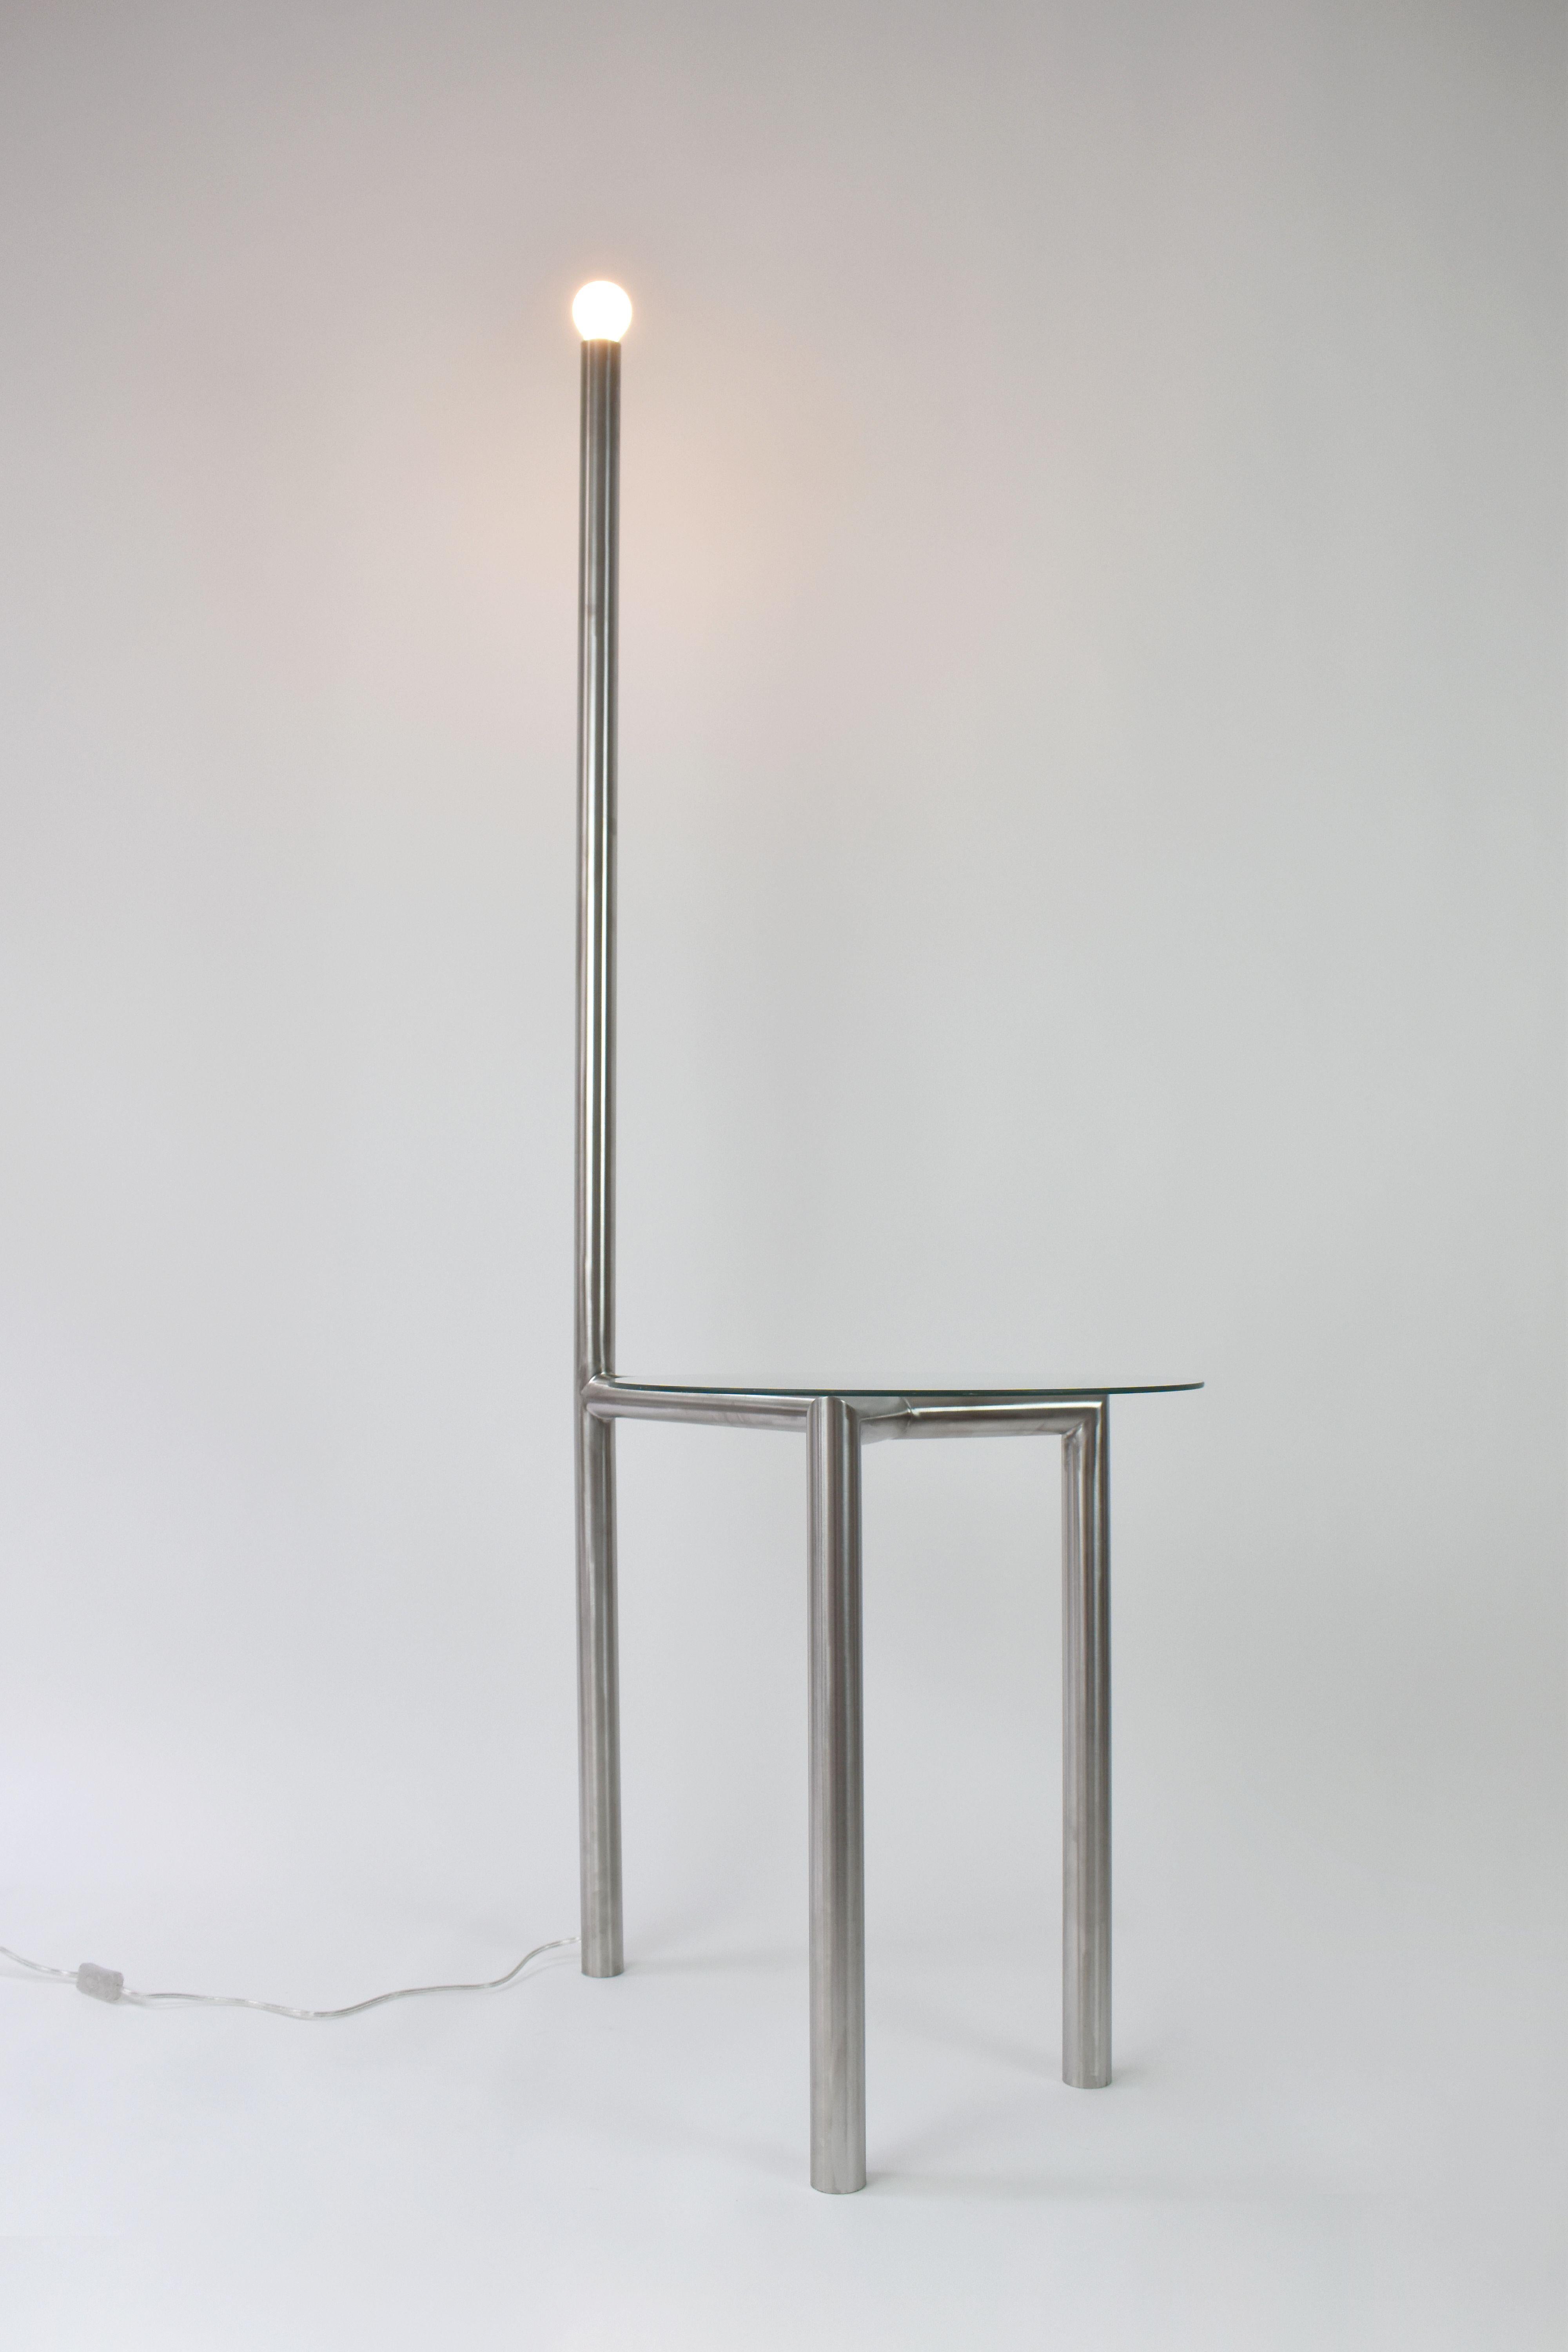 German YT Floor Lamp by Studio Kuhlmann